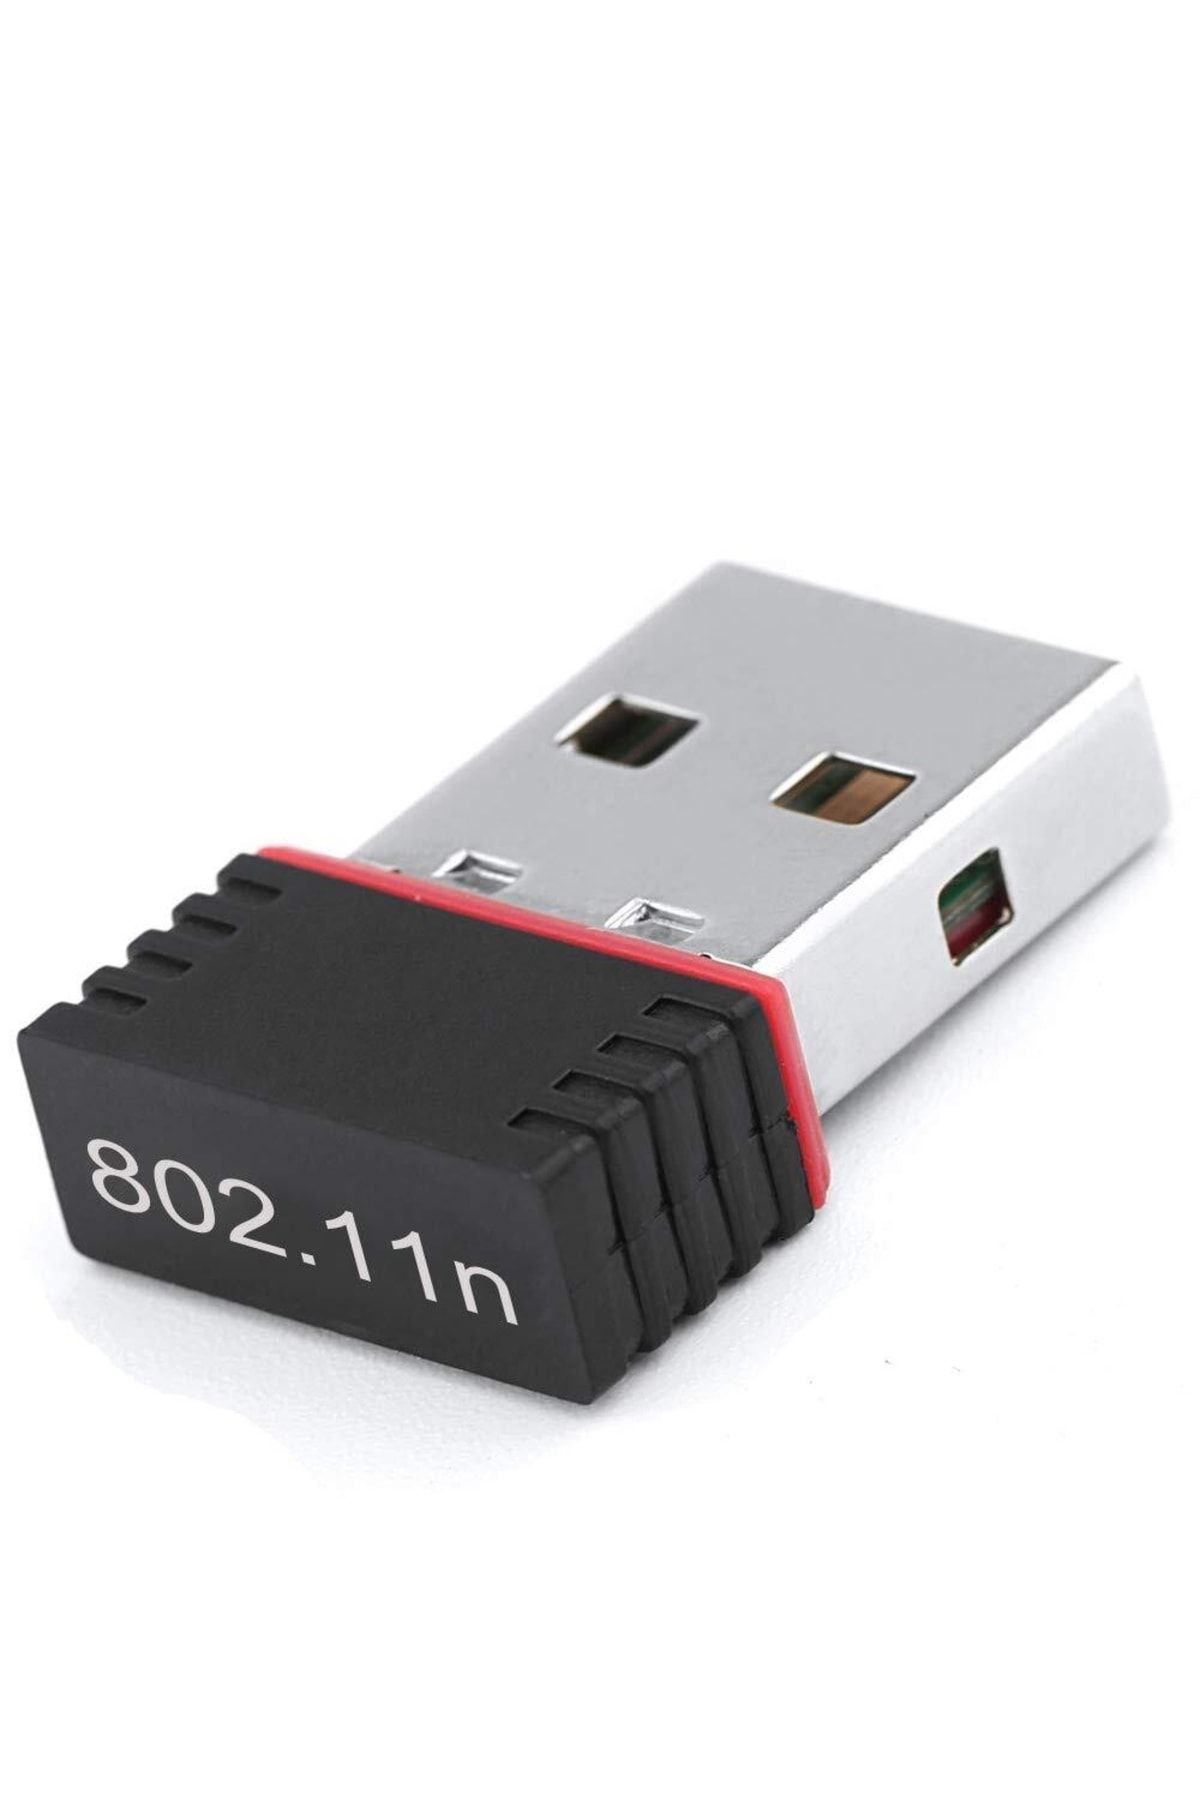 Драйвера для usb 2.0 wireless 802.11 n. Wireless 11n USB Adapter. USB Wi-Fi адаптер (802.11n). WIFI адаптер Wireless lan USB 802.11 N. WIFI Adapter 11n.